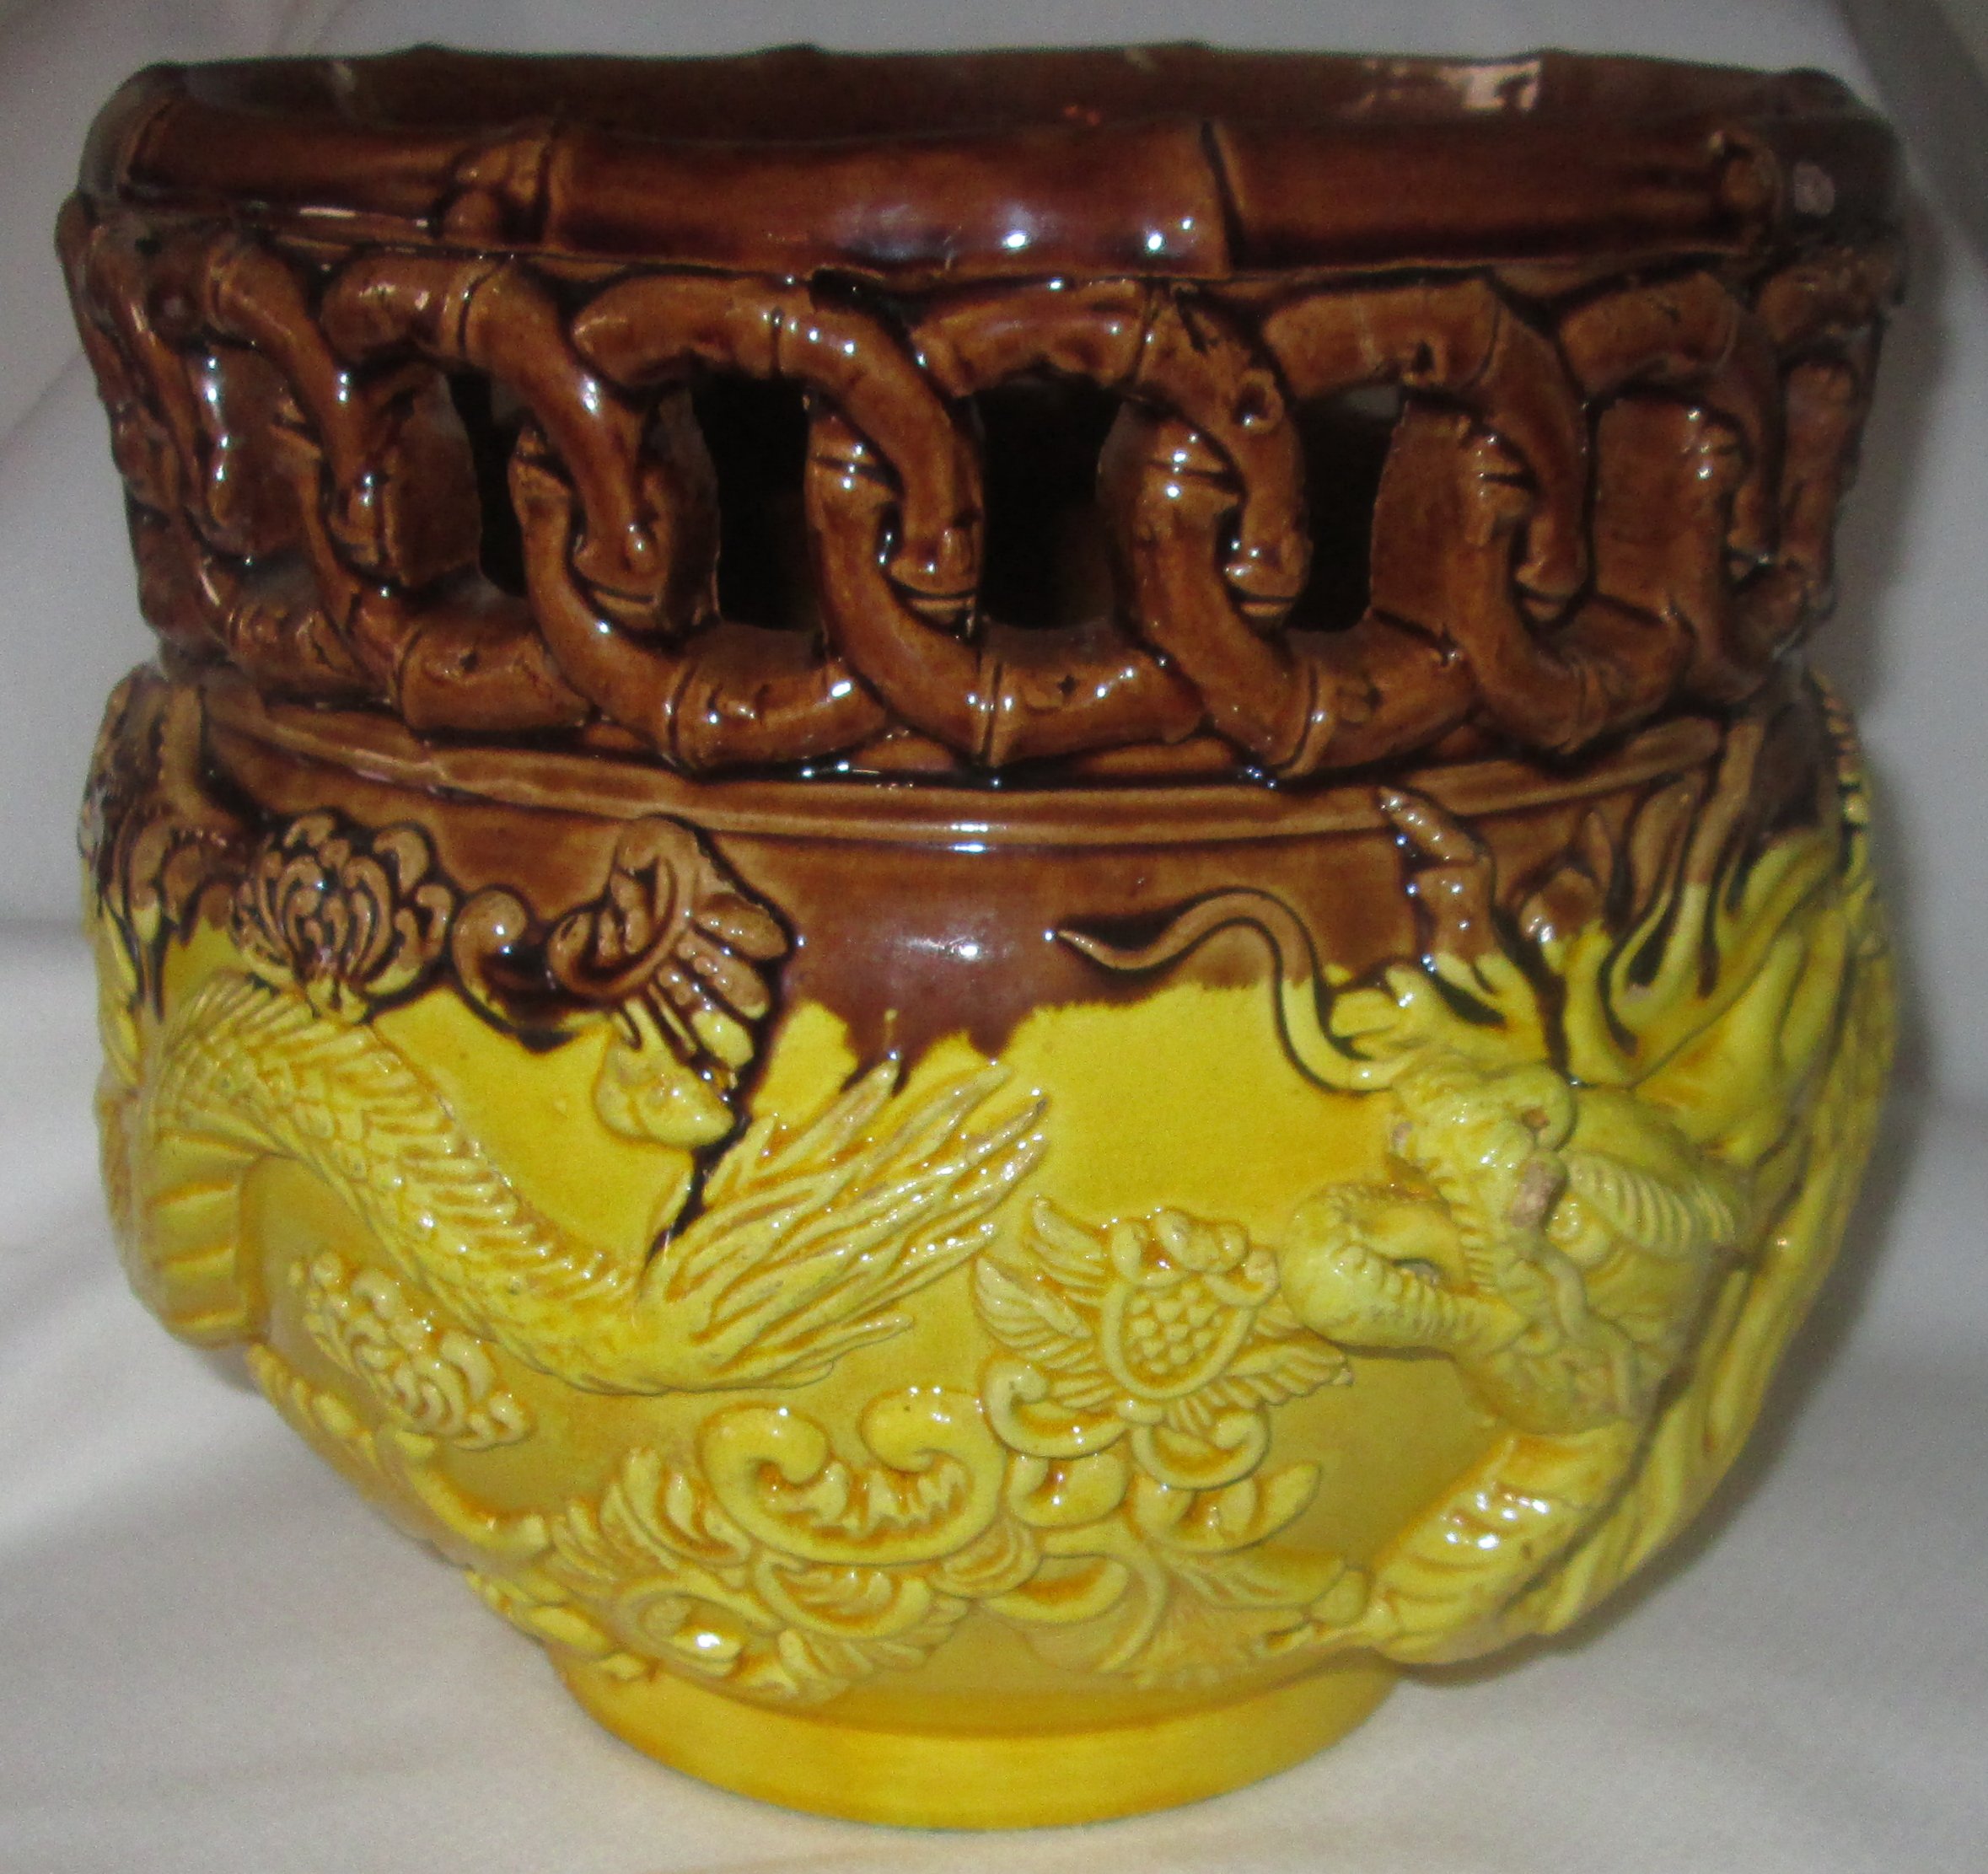 Pottery ceramics 1180.jpg